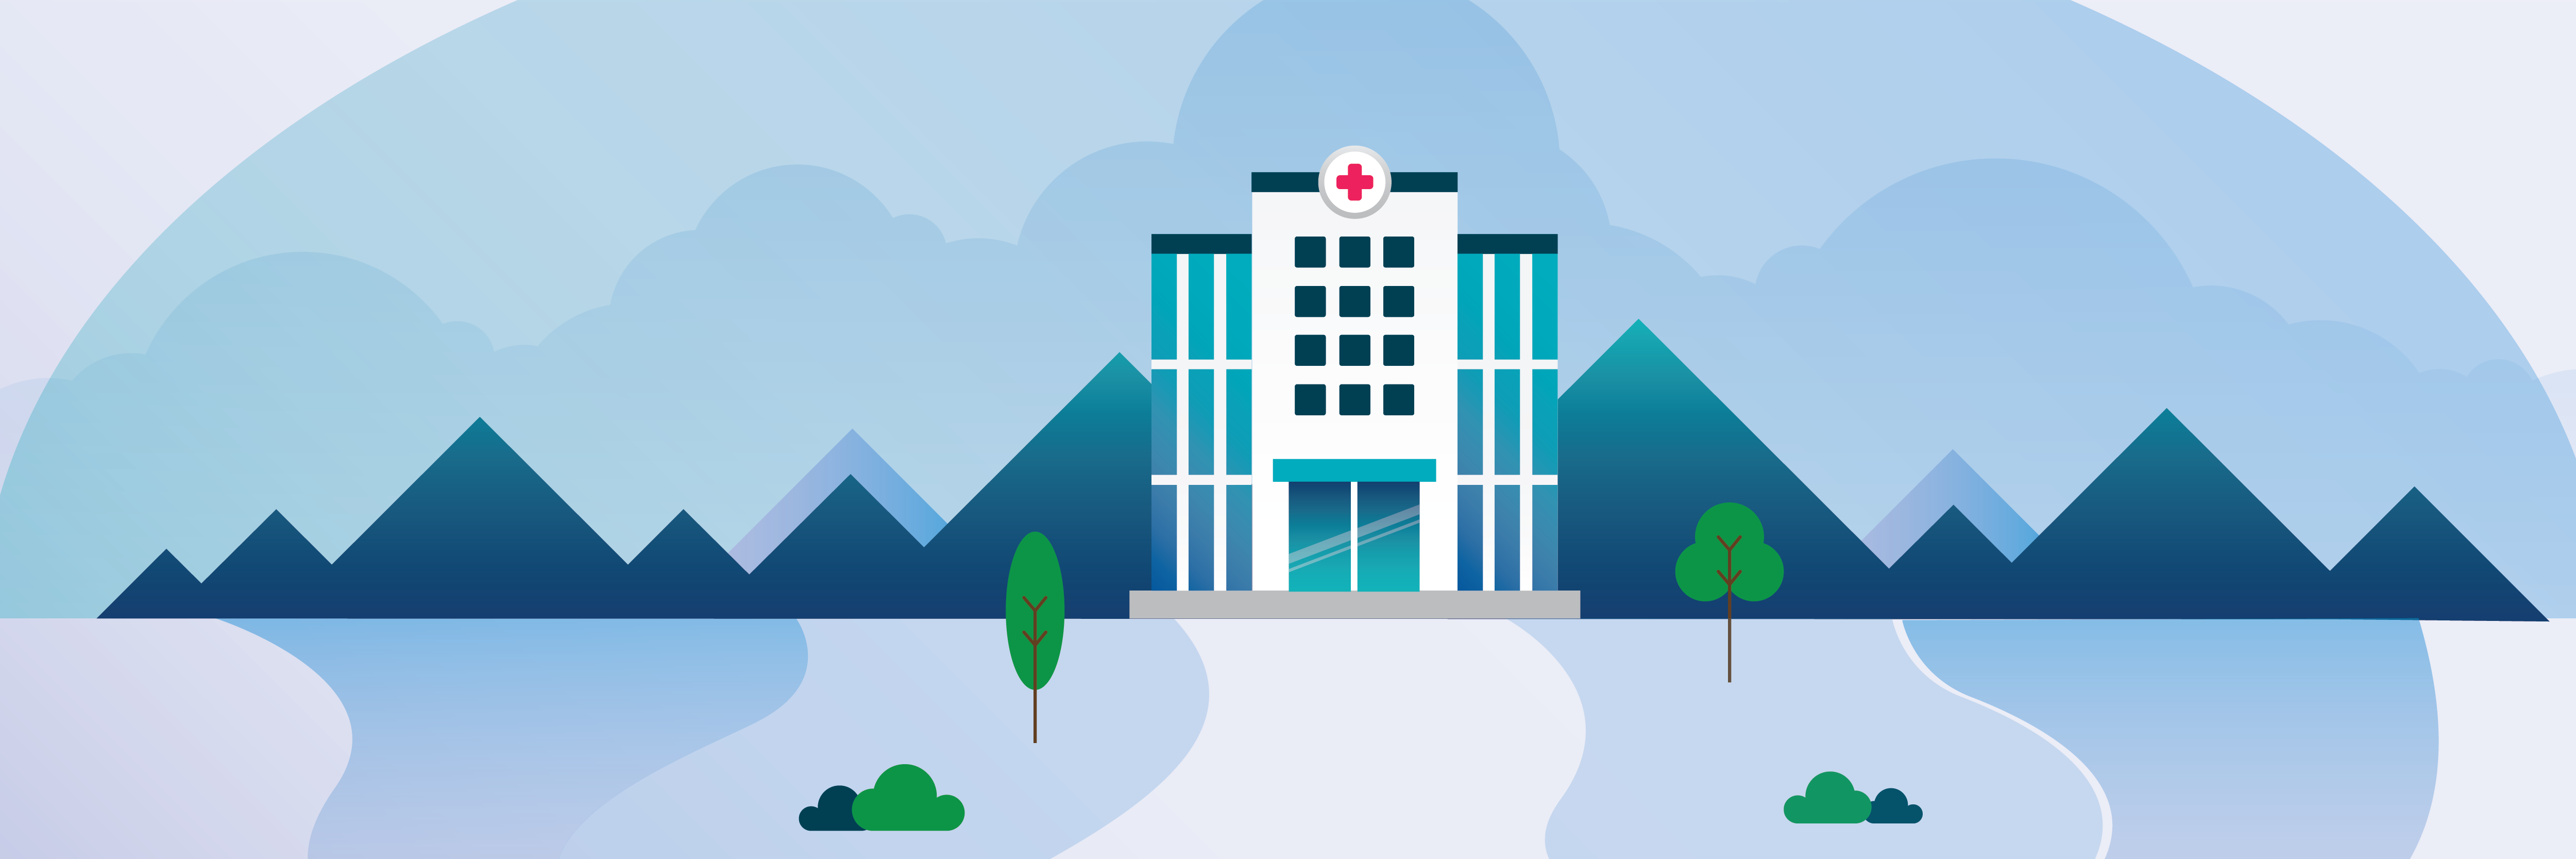 Graphic representation of a hospital set among mountains